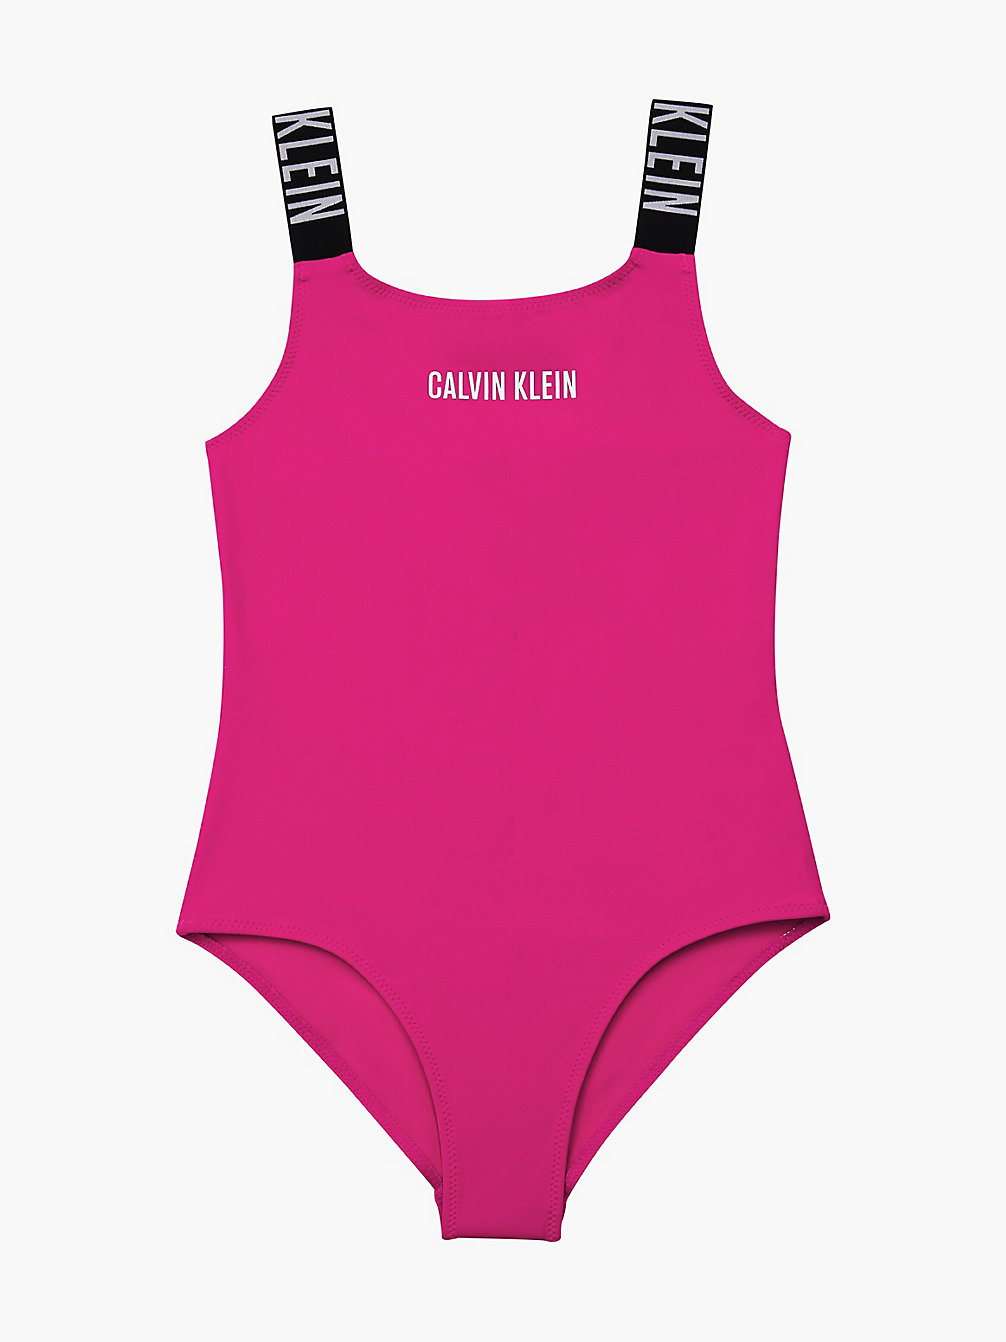 ROYAL PINK Girls Swimsuit - Intense Power undefined girls Calvin Klein